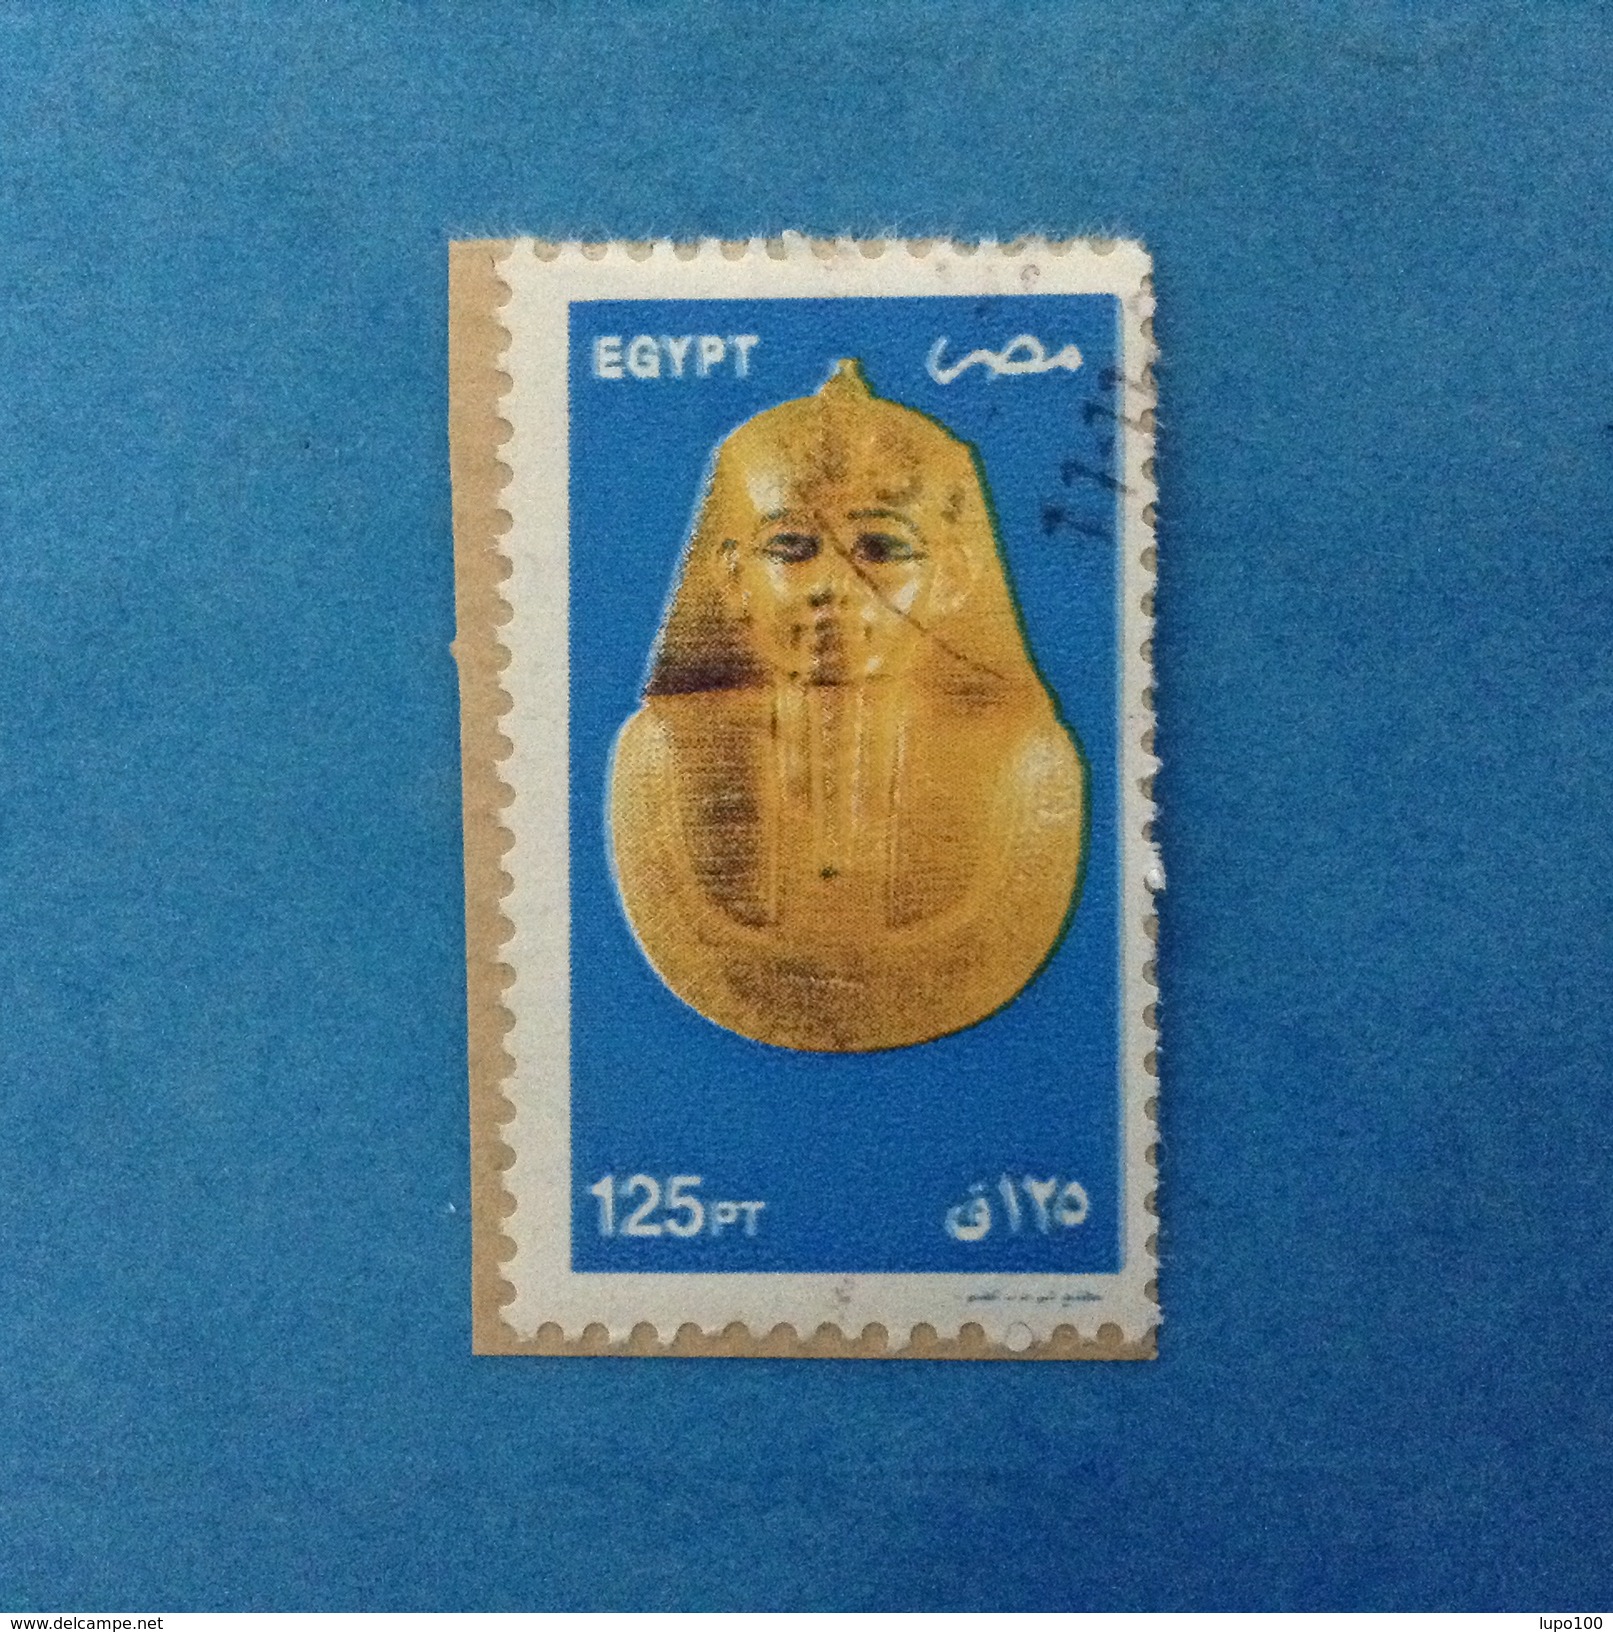 2002 EGITTO EGYPT FRANCOBOLLO USATO STAMP USED - MASCHERA FARAONE 125 - Used Stamps